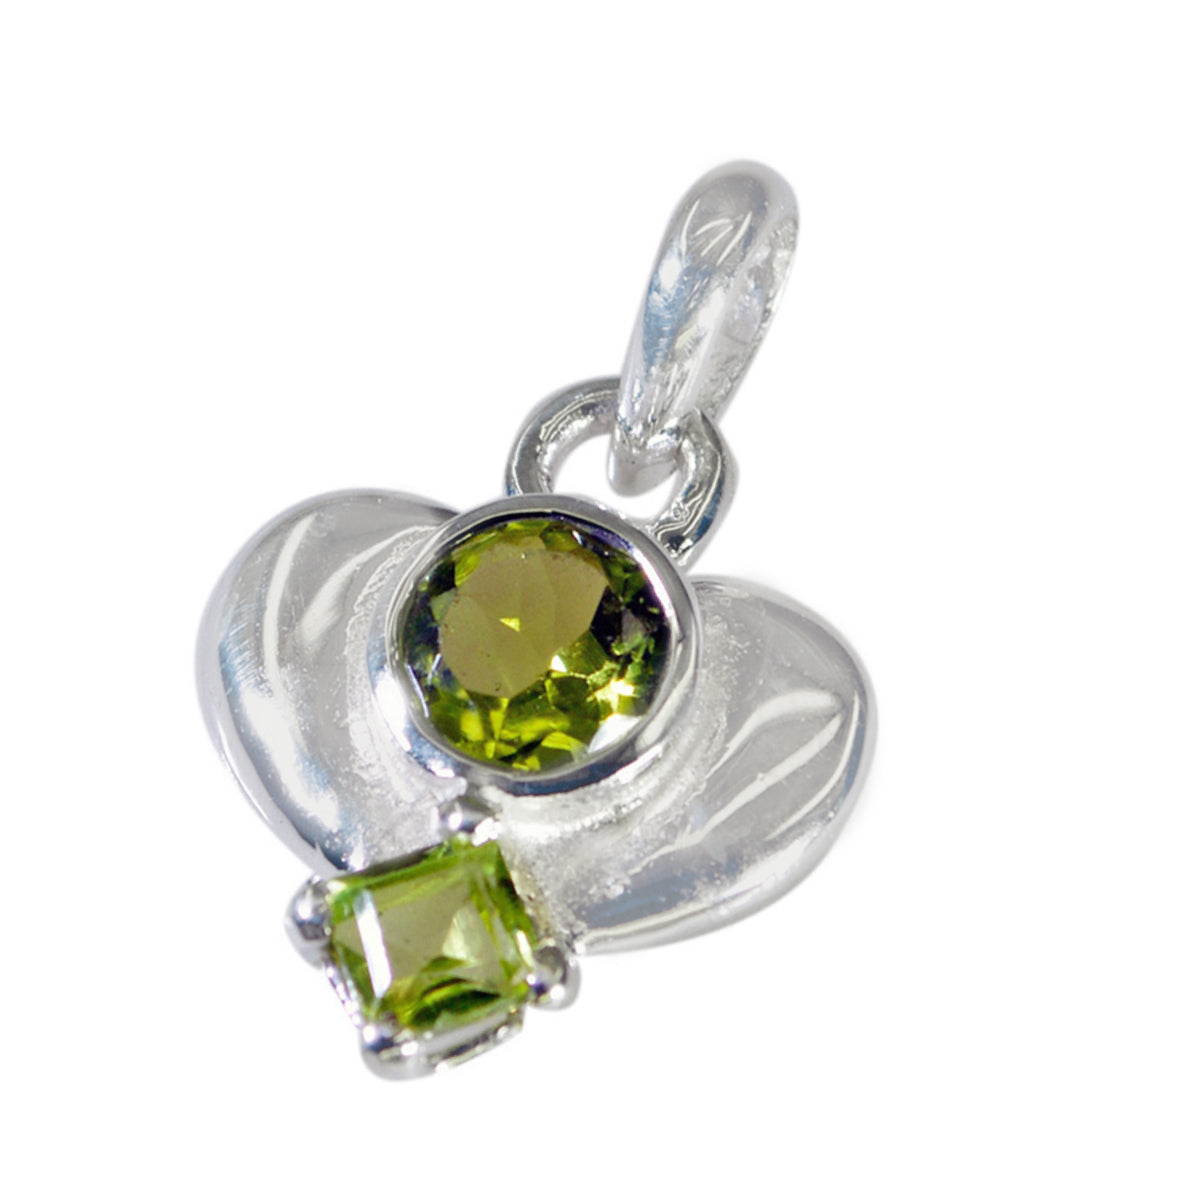 riyo beauteous gems mångfacetterad grön peridot massivt silverhänge present till jubileum